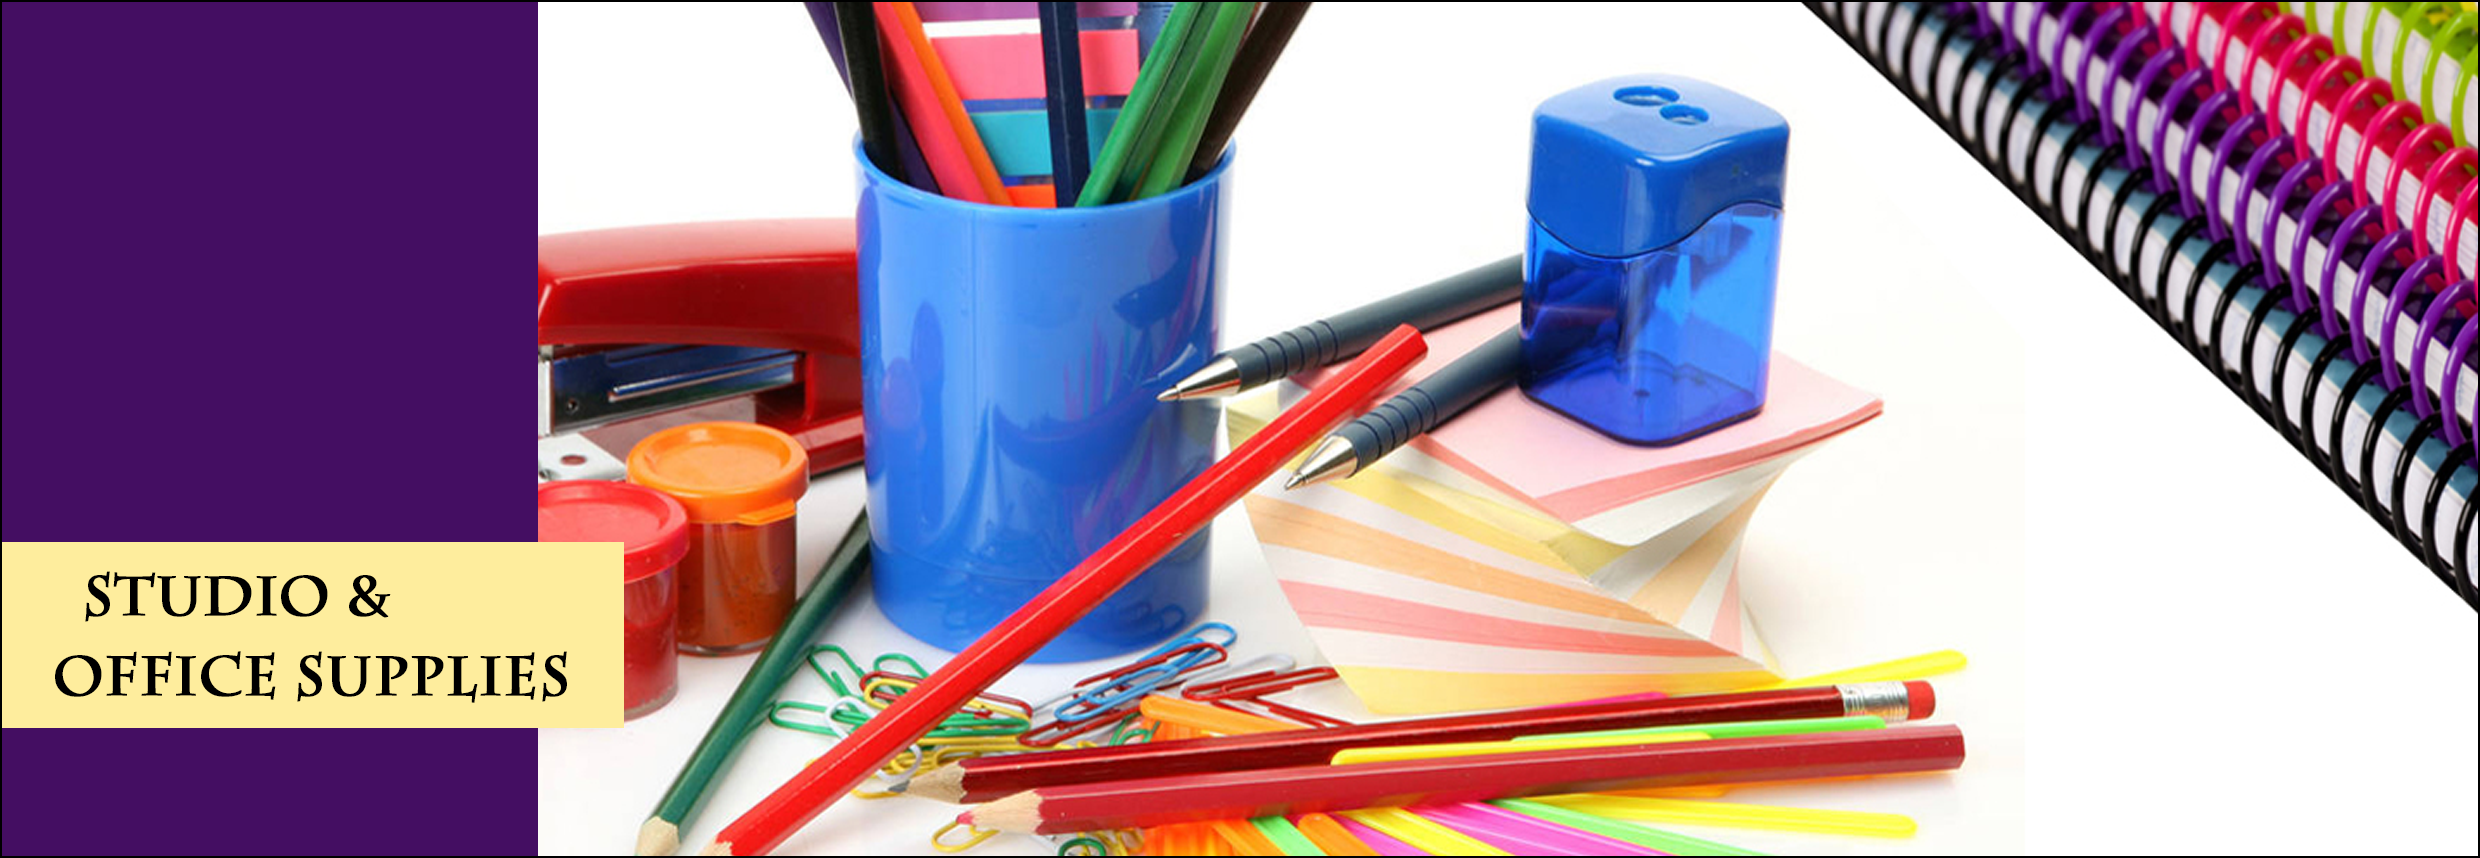 Buy Art Studio & Office Supplies | Stationery Store Online | Creative Minds  Art Supplies Store Dubai